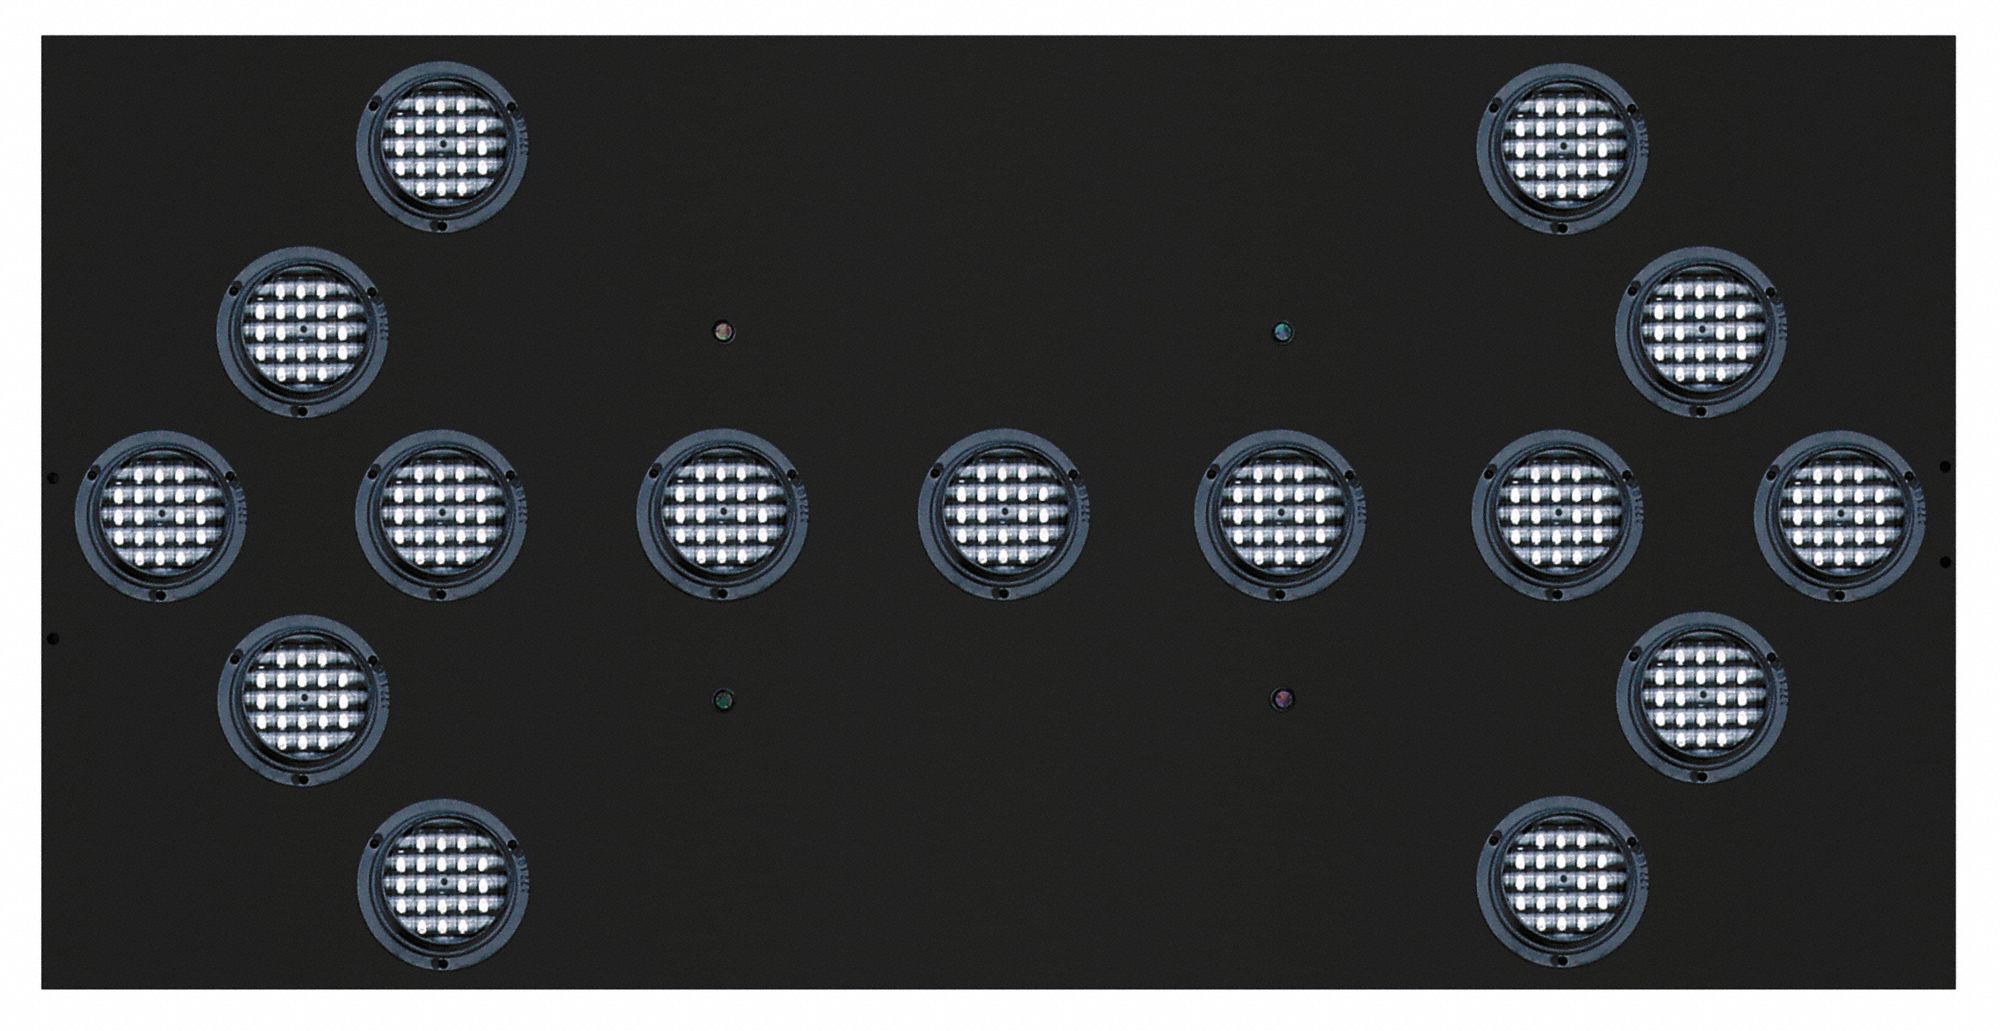 Arrow Board: LED, 5 Flash Patterns - Vehicle Lighting, Wire Harness, Amber, MUTCD